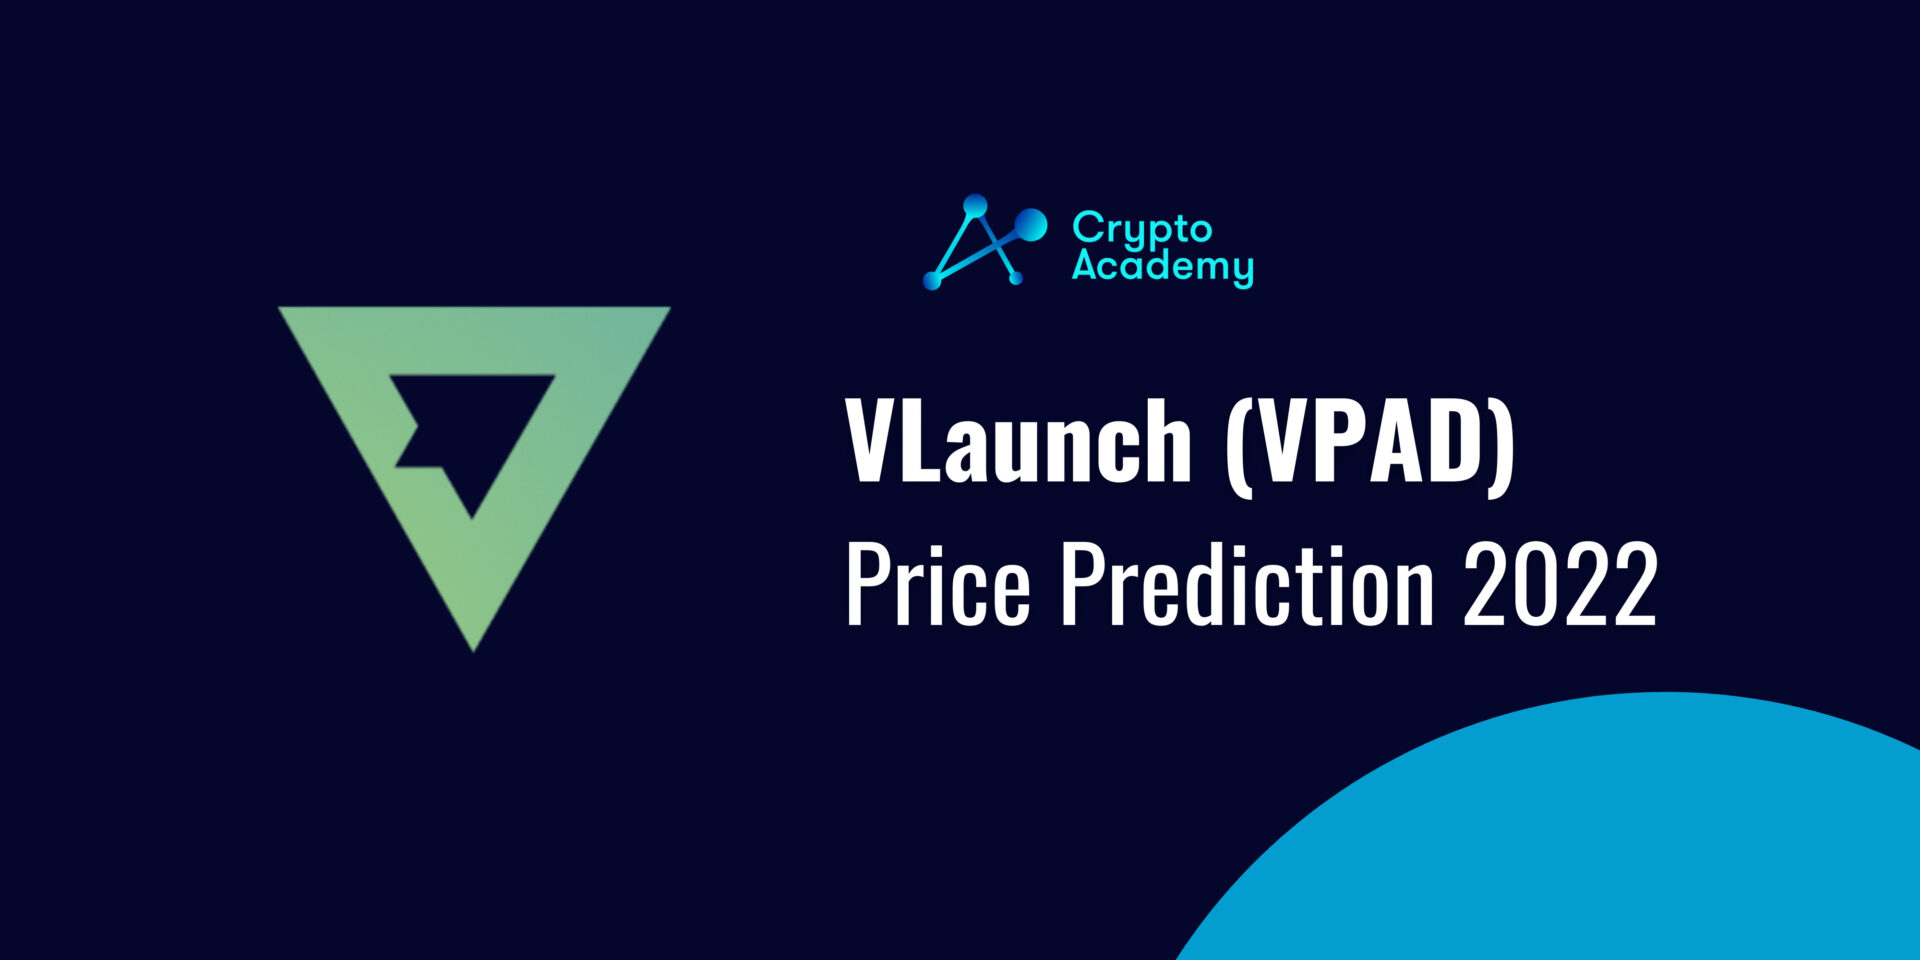 VLaunch (VPAD) Price Prediction 2022 and Beyond – Can VPAD Eventually Reach $50?